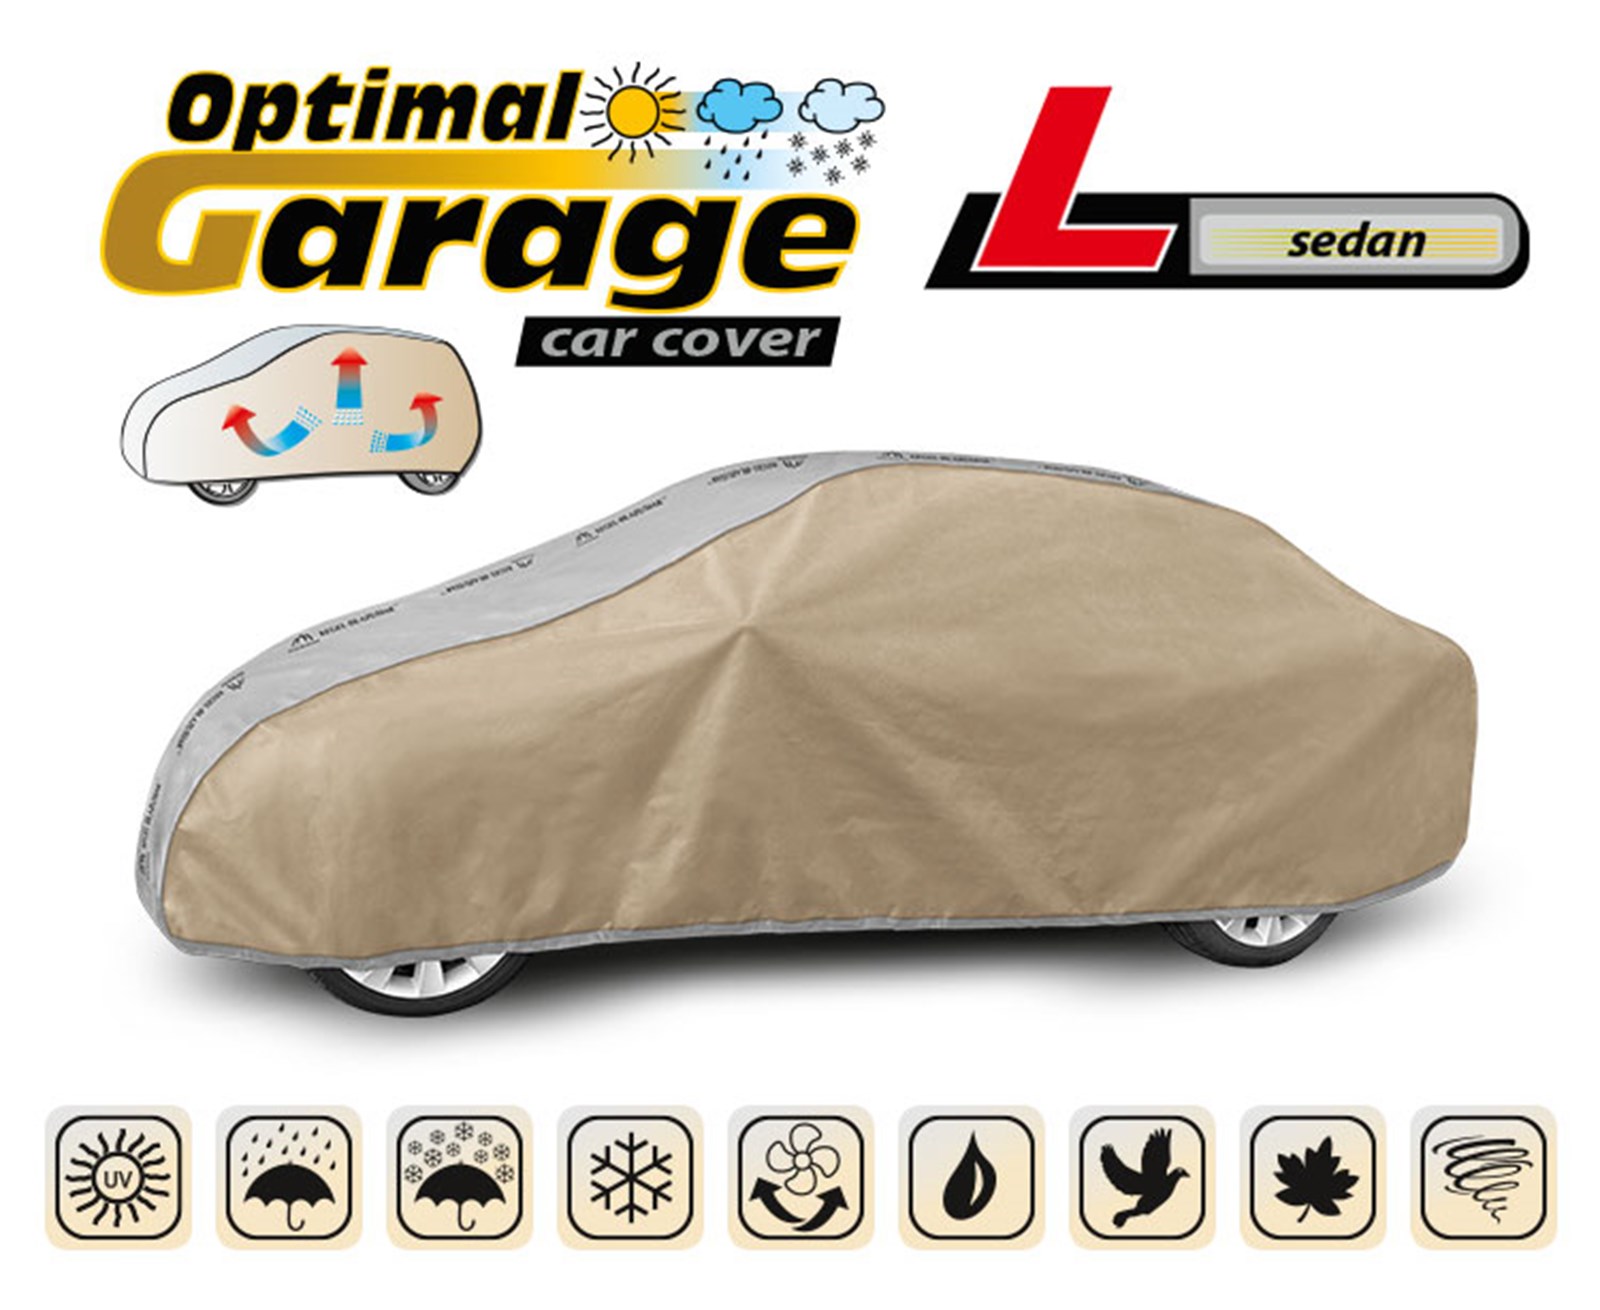 optimal-garage-L-sd-3.jpg